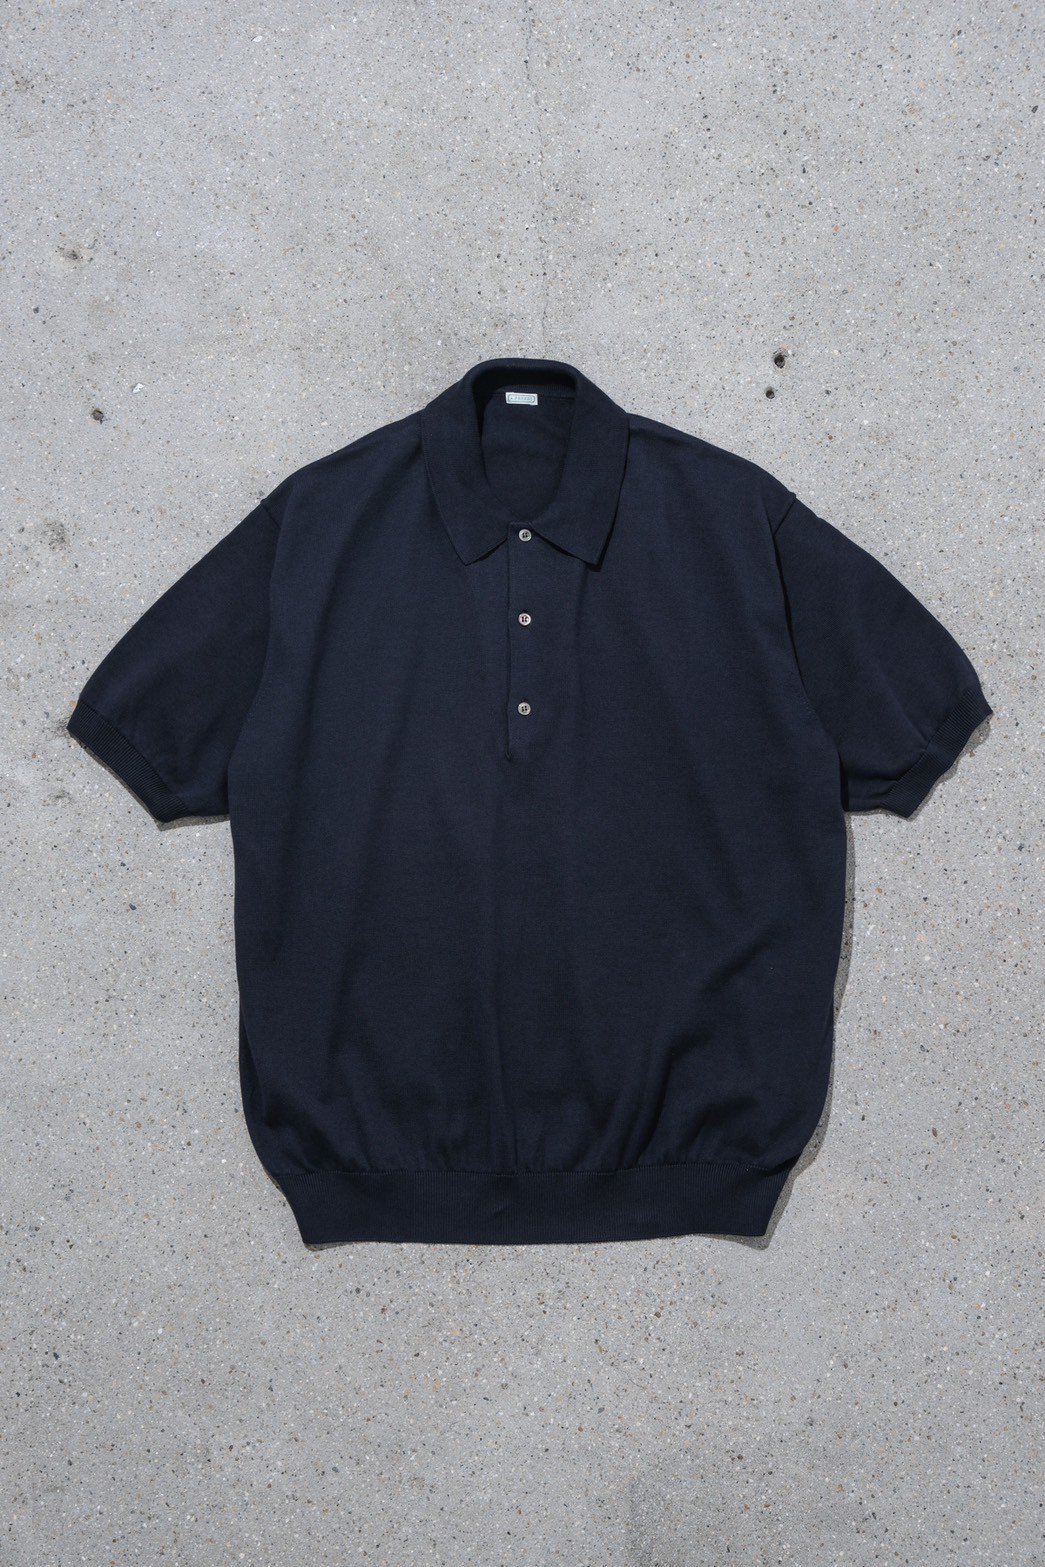 A.PRESSE / Cotton Knit S/S Polo Shirts